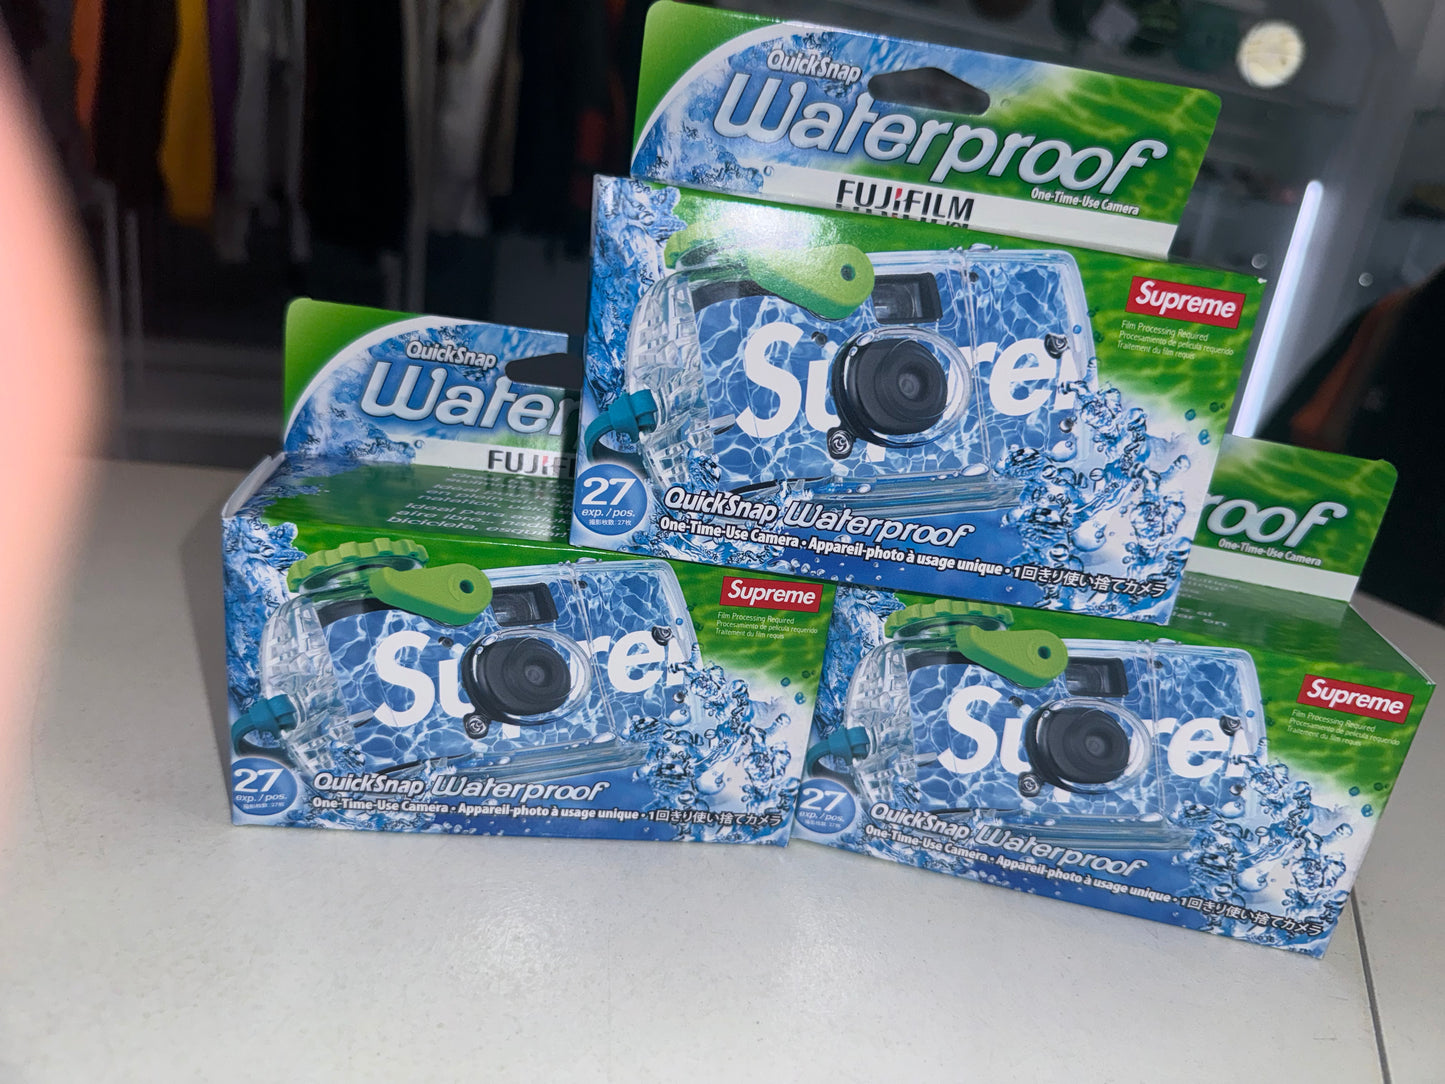 Supreme FujiFilm Waterproof Camera
Blue